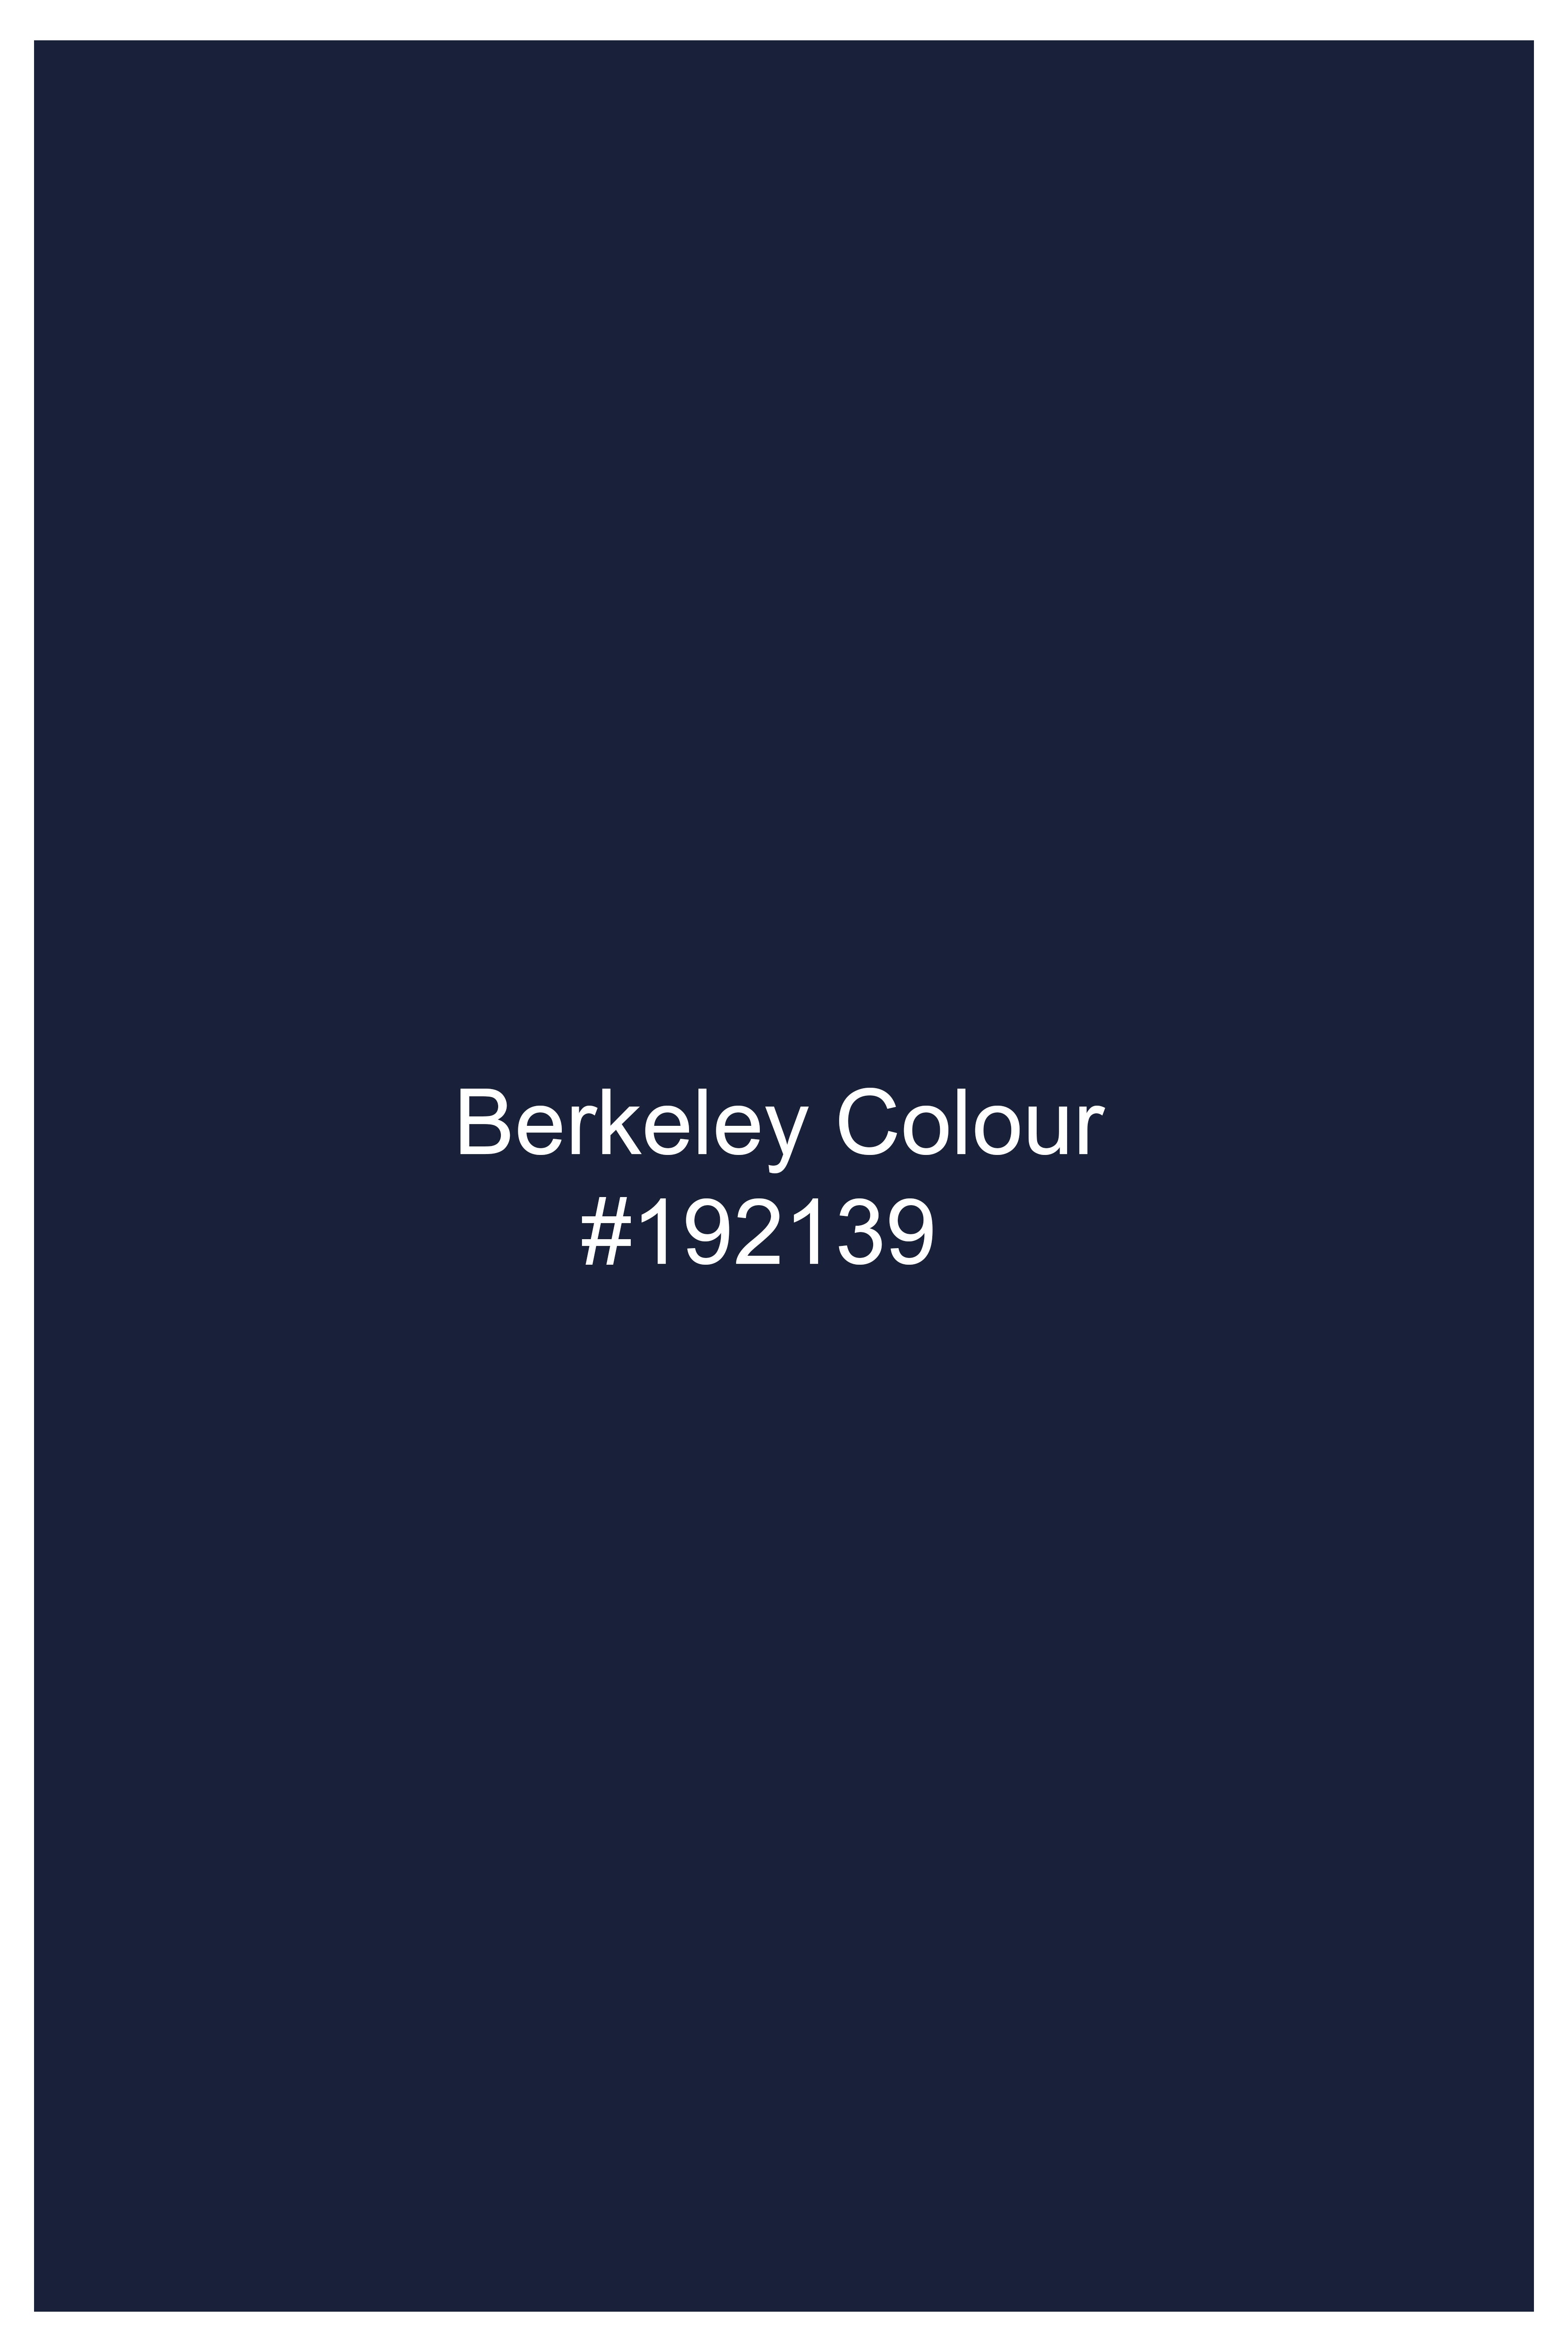 Berkeley Blue Wool Rich Cross Buttoned Bandhgala Suit ST2820-CBG2-36, ST2820-CBG2-38, ST2820-CBG2-40, ST2820-CBG2-42, ST2820-CBG2-44, ST2820-CBG2-46, ST2820-CBG2-48, ST2820-CBG2-50, ST2820-CBG2-52, ST2820-CBG2-54, ST2820-CBG2-56, ST2820-CBG2-58, ST2820-CBG2-60